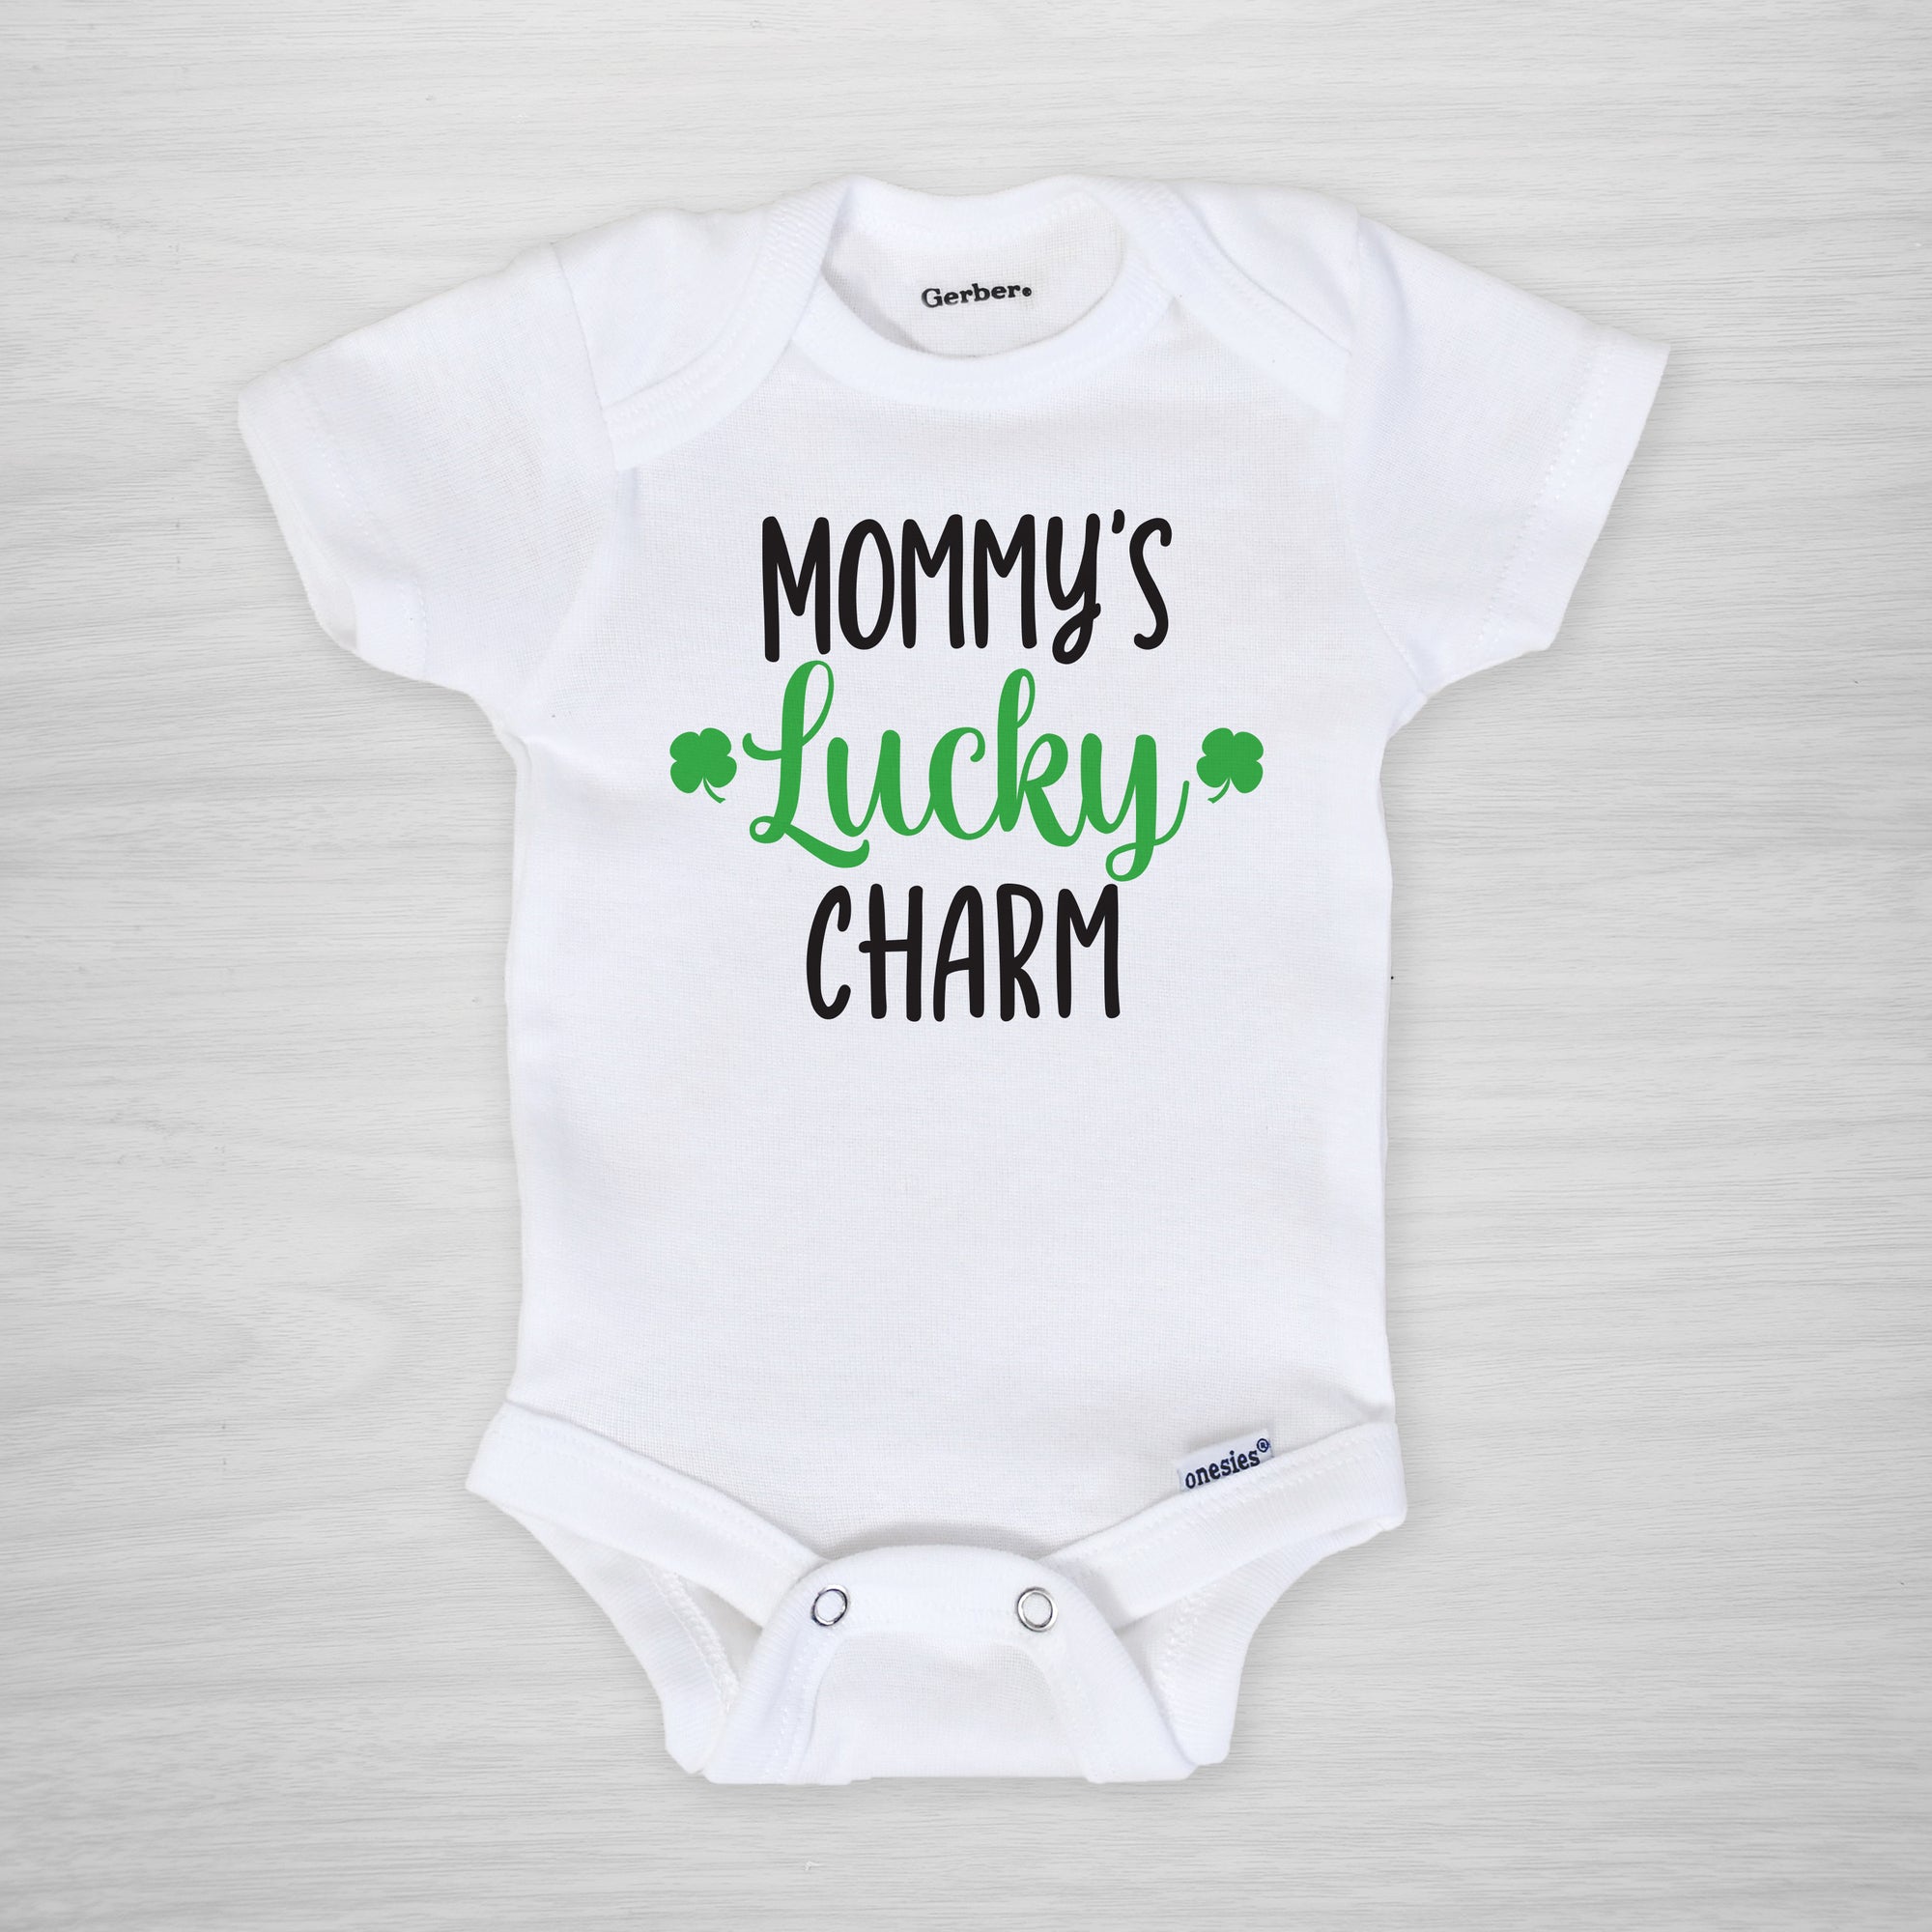 Mommy's Lucky Charm Onesie®